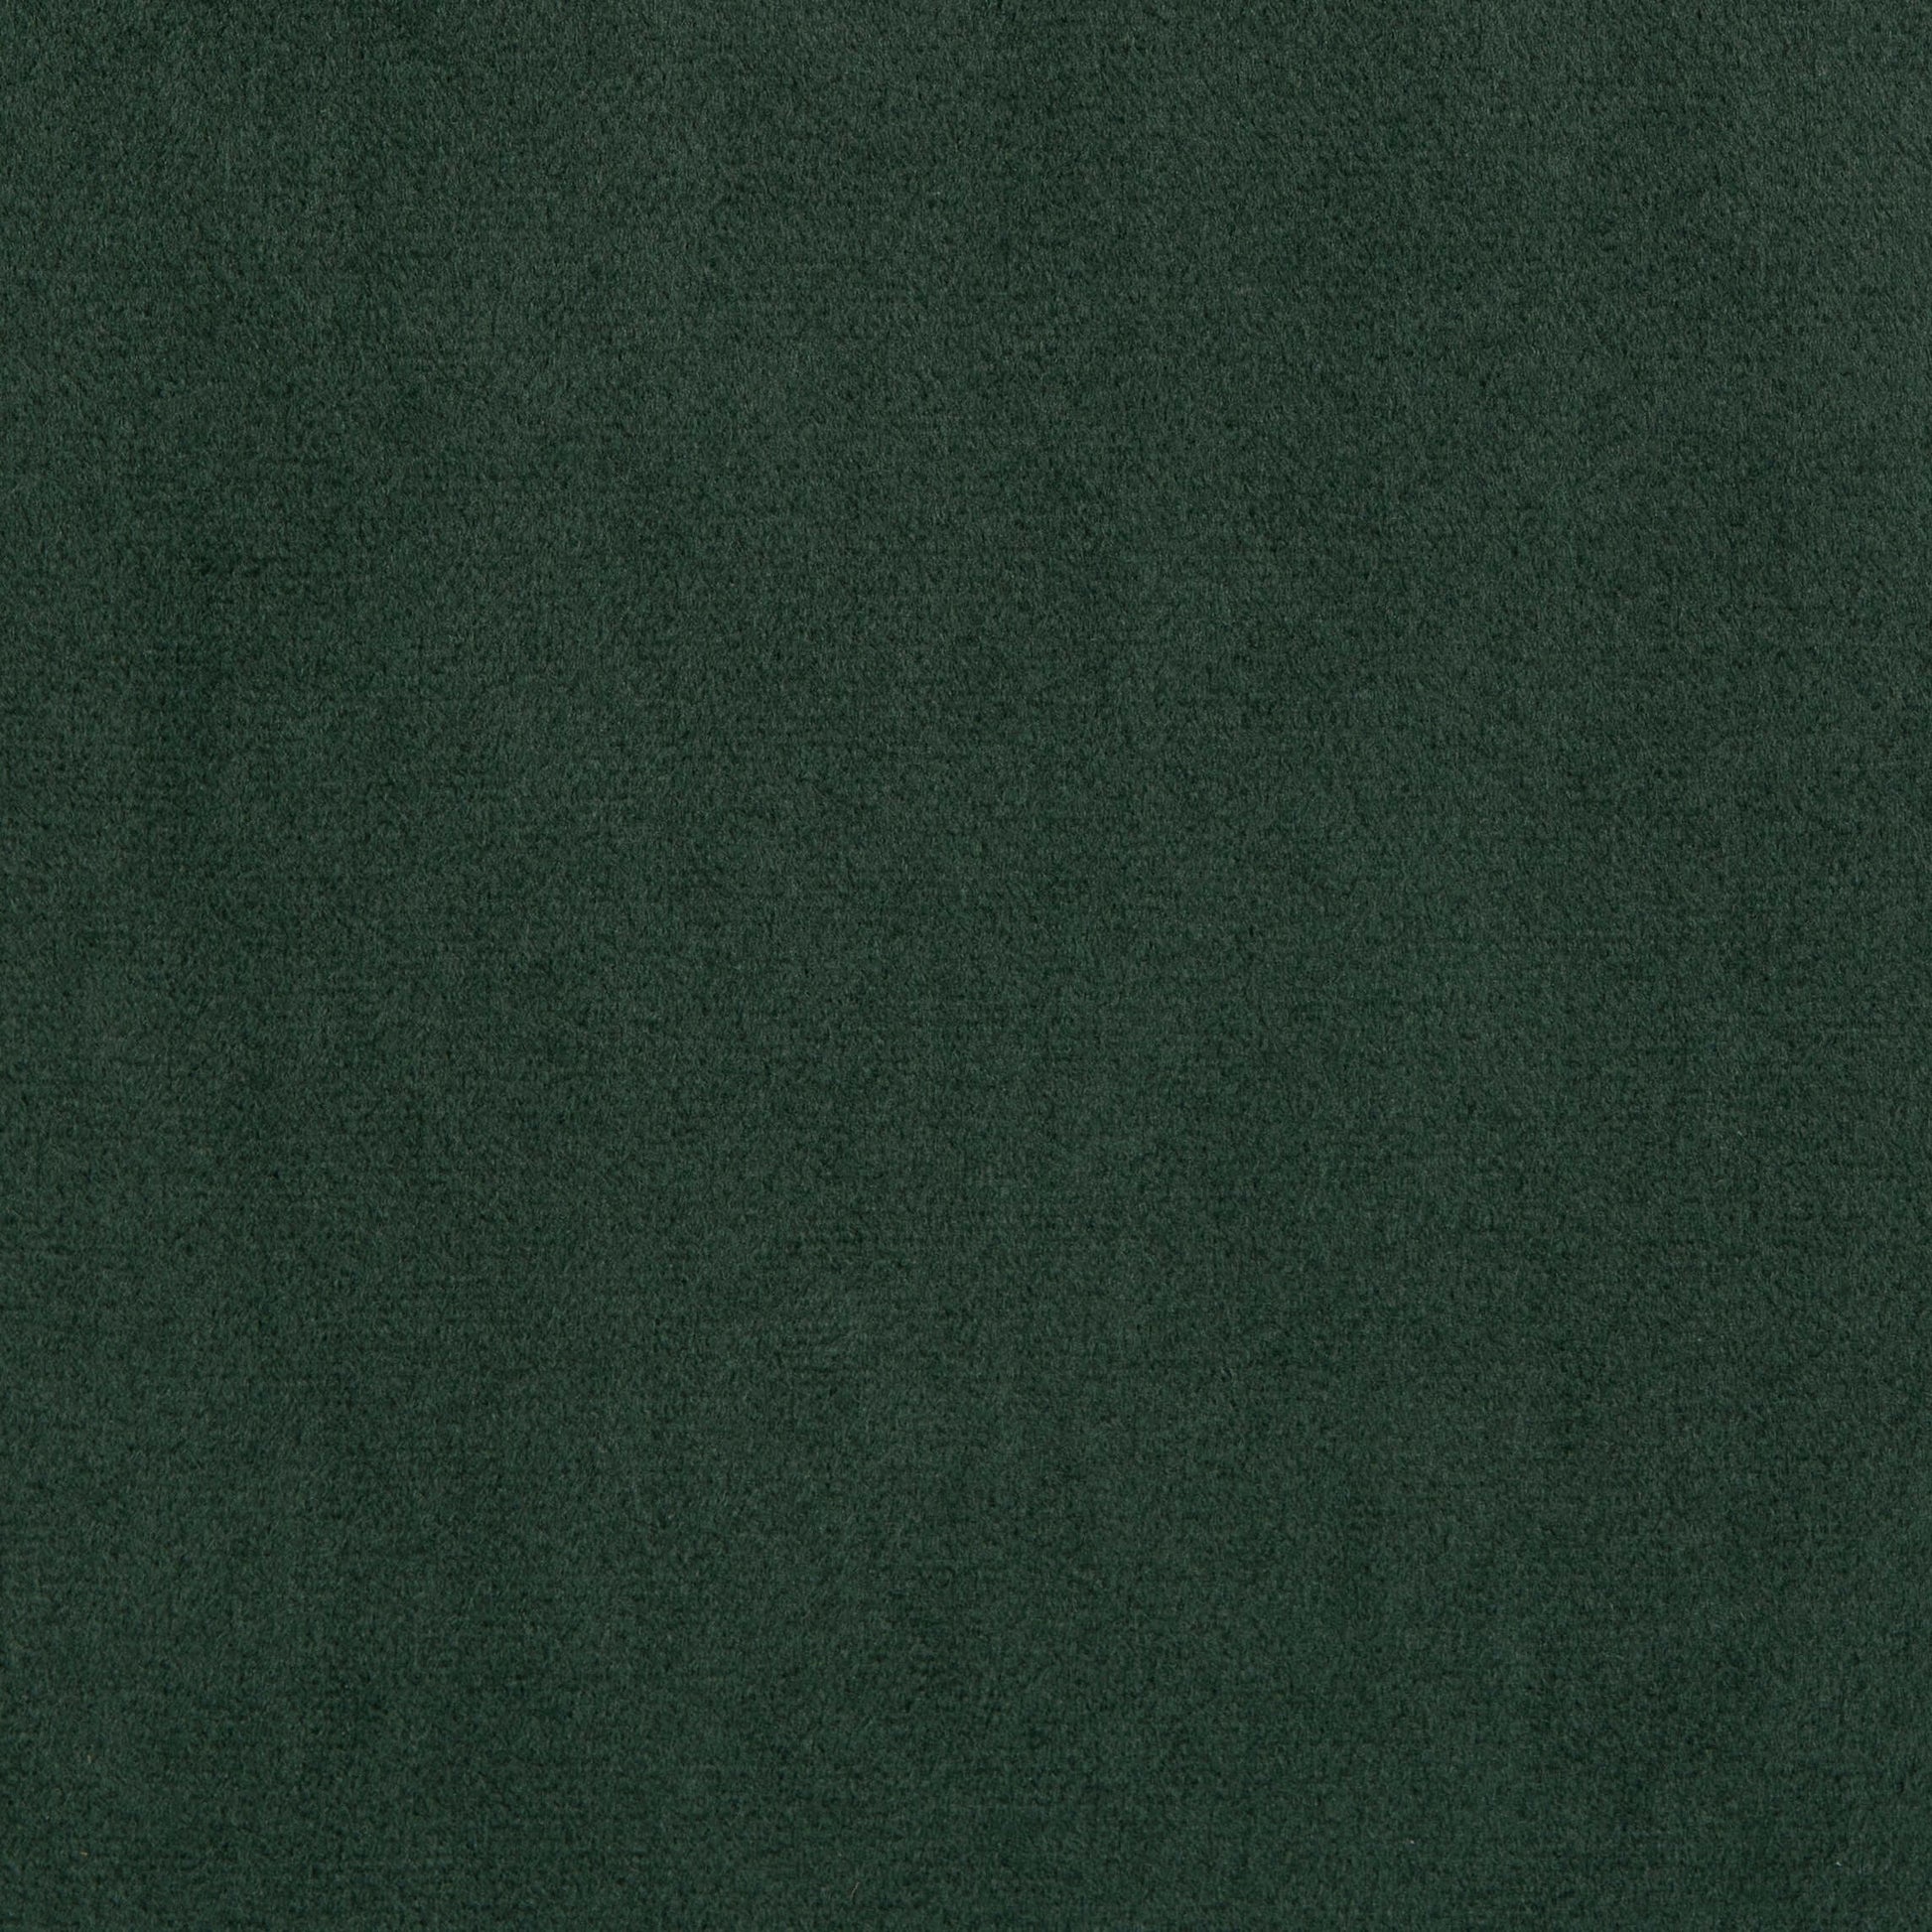 Amelia Storage Ottoman Green Velvet Fabric- The Right Buy Store